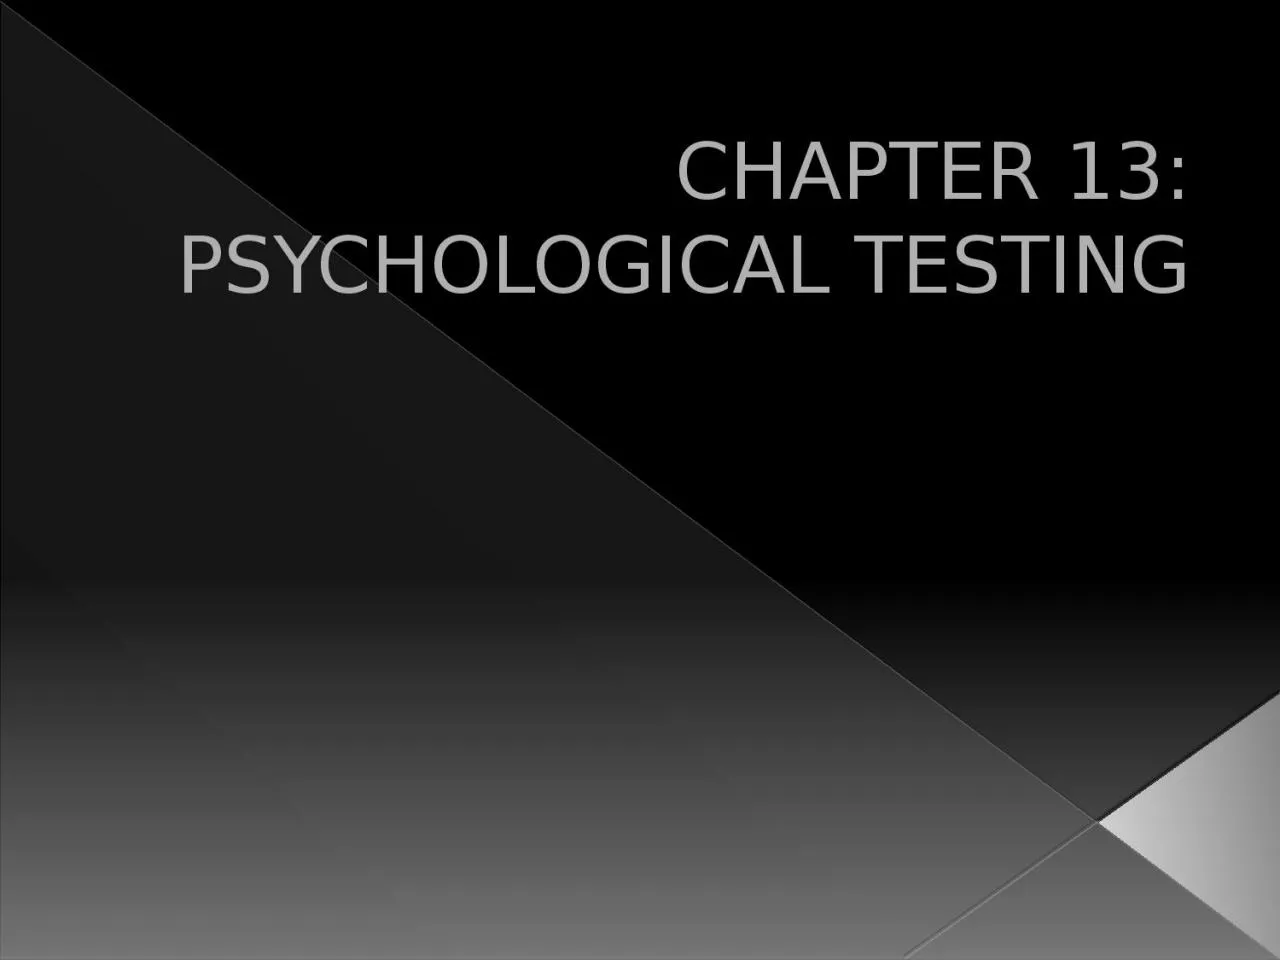 CHAPTER 13: PSYCHOLOGICAL TESTING